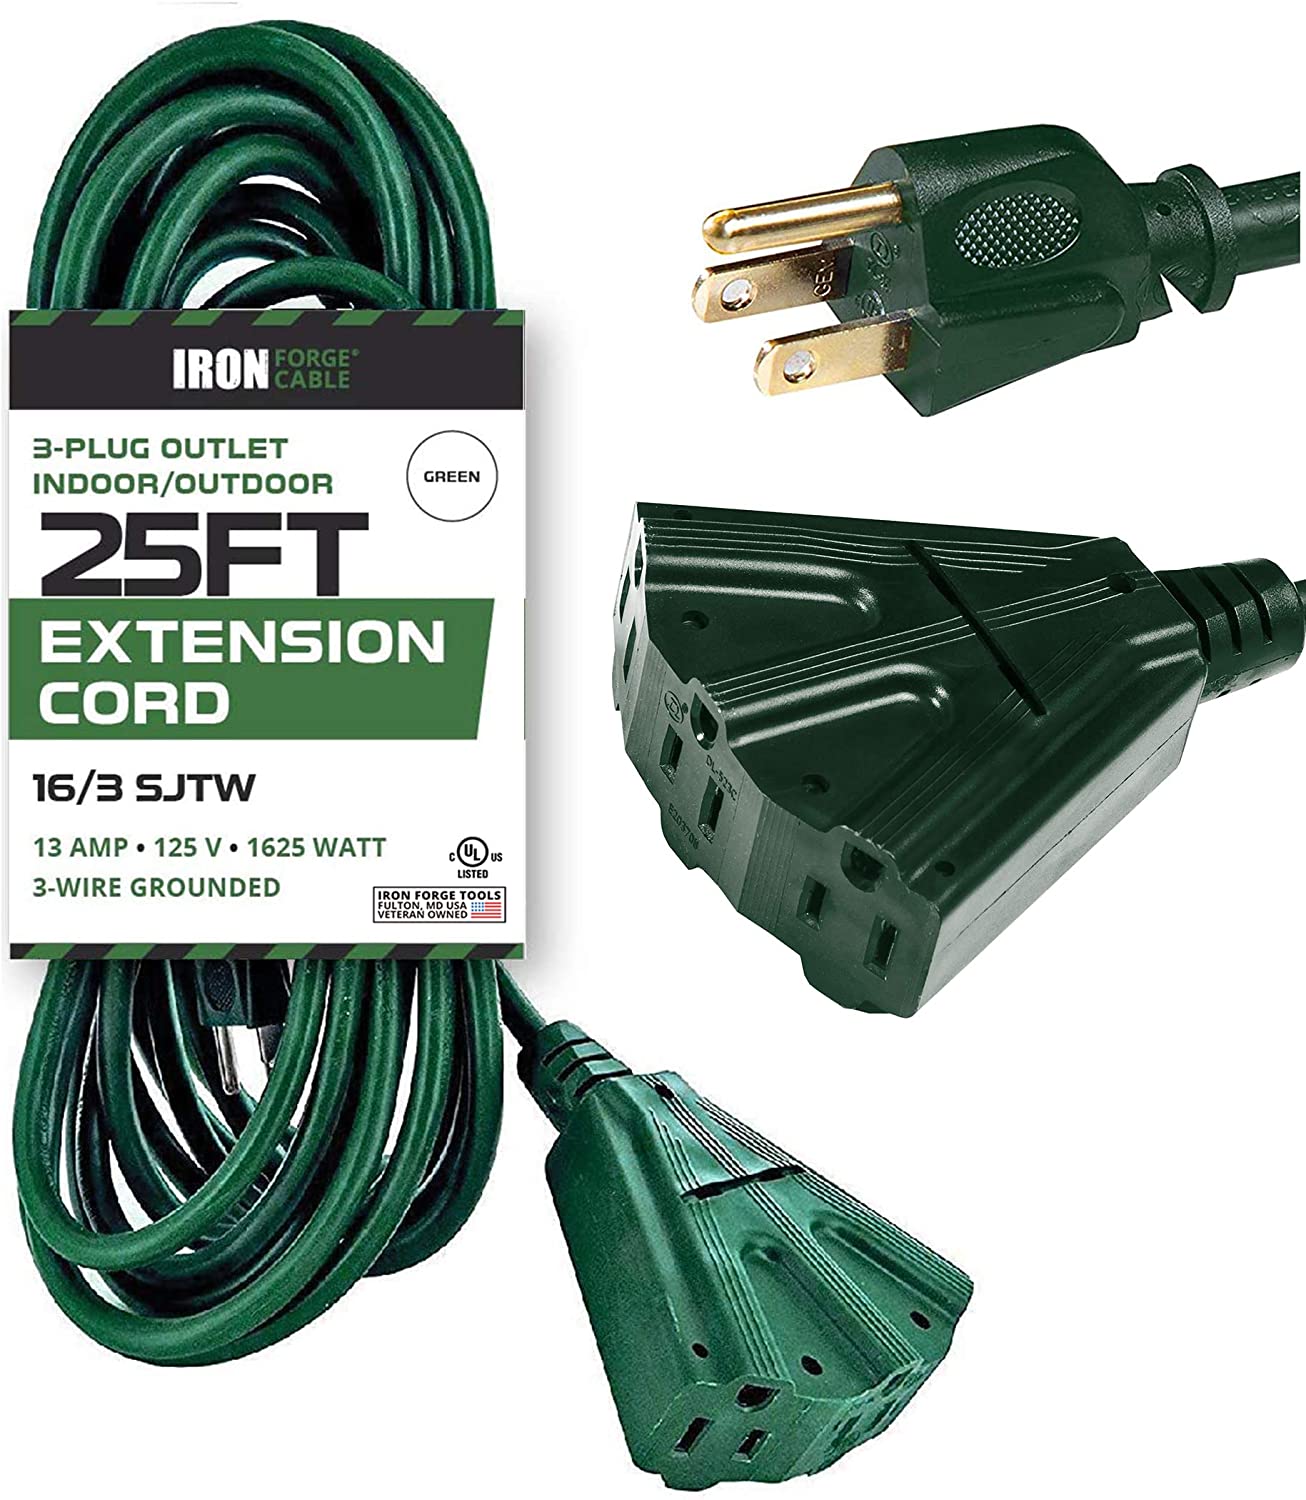 25 foot Extension cord pass through electrical garden 3 prong outlet indoor outdoor